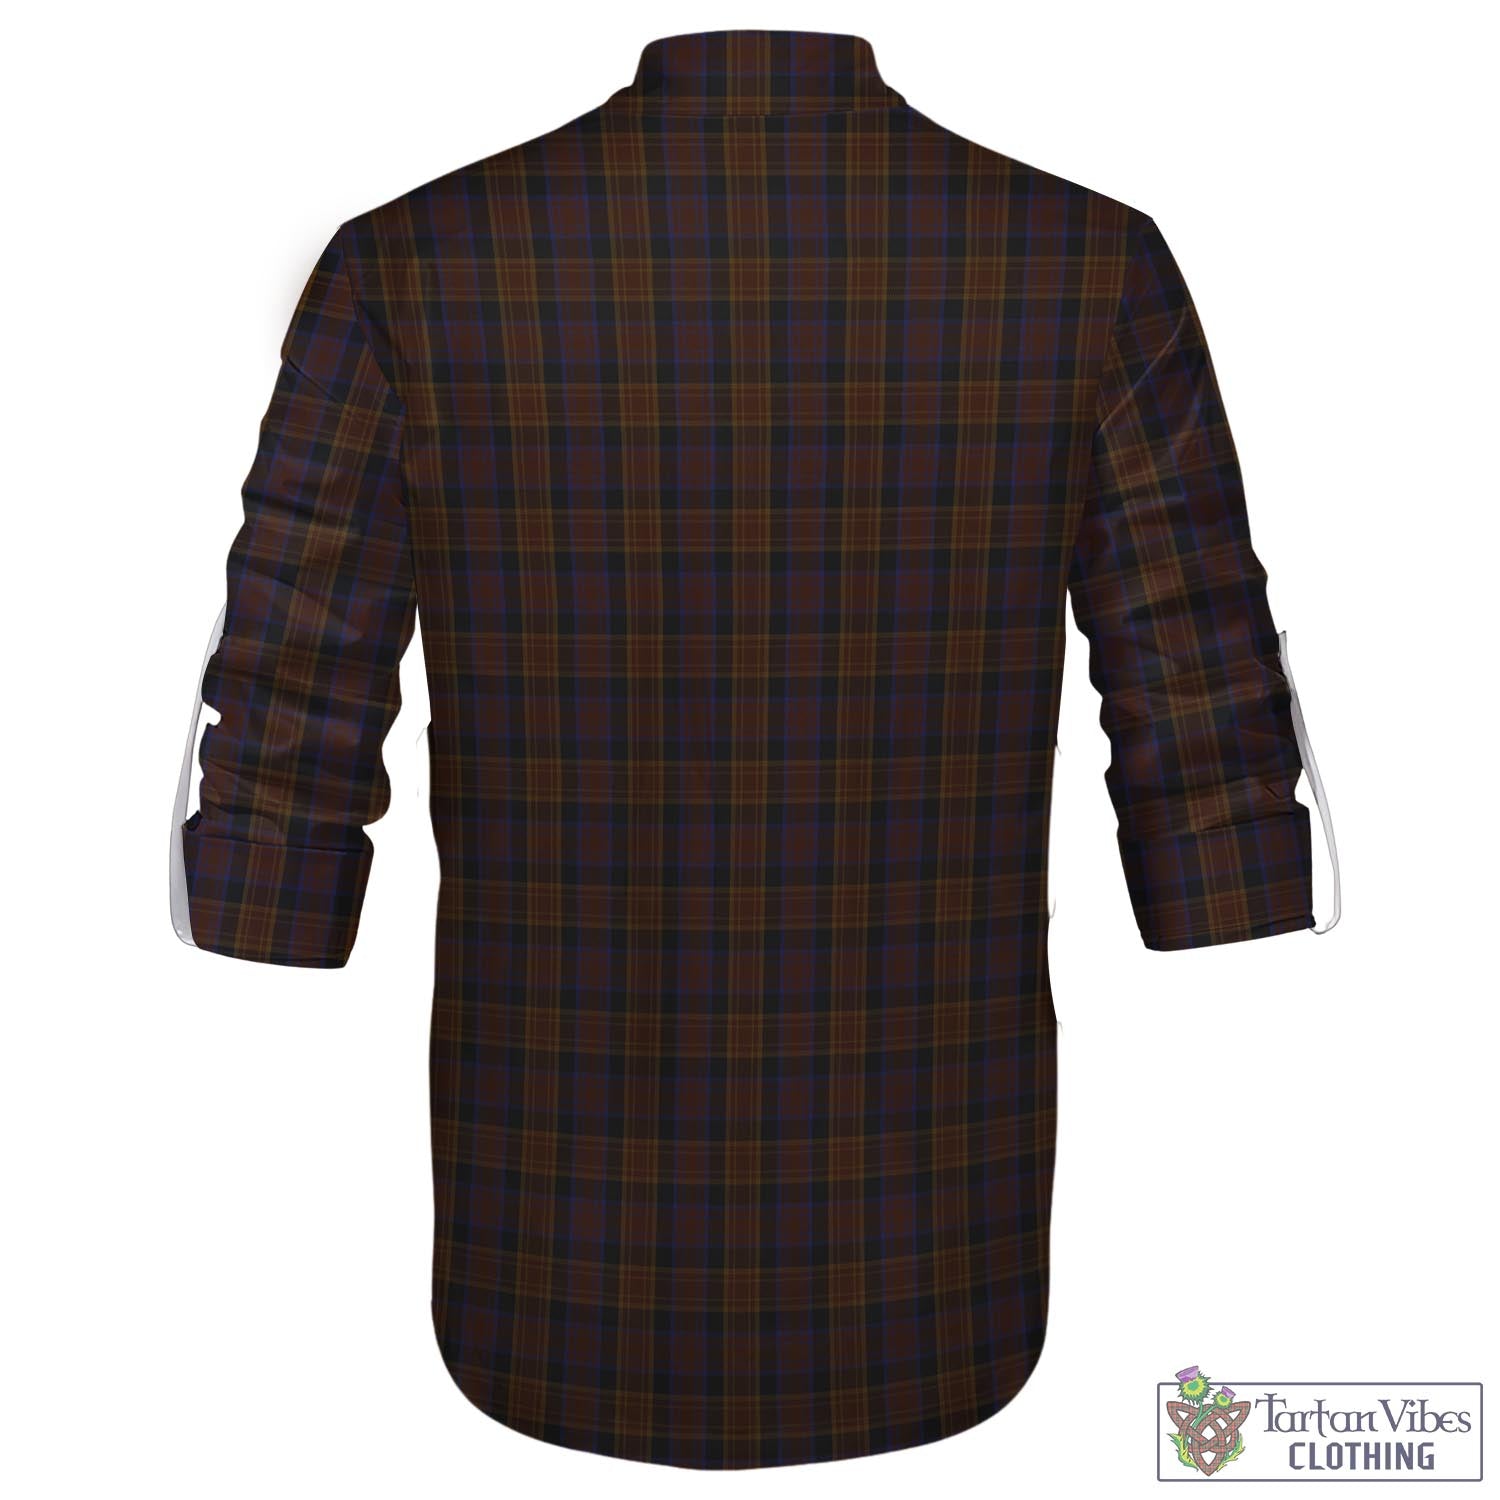 Tartan Vibes Clothing Laois County Ireland Tartan Men's Scottish Traditional Jacobite Ghillie Kilt Shirt